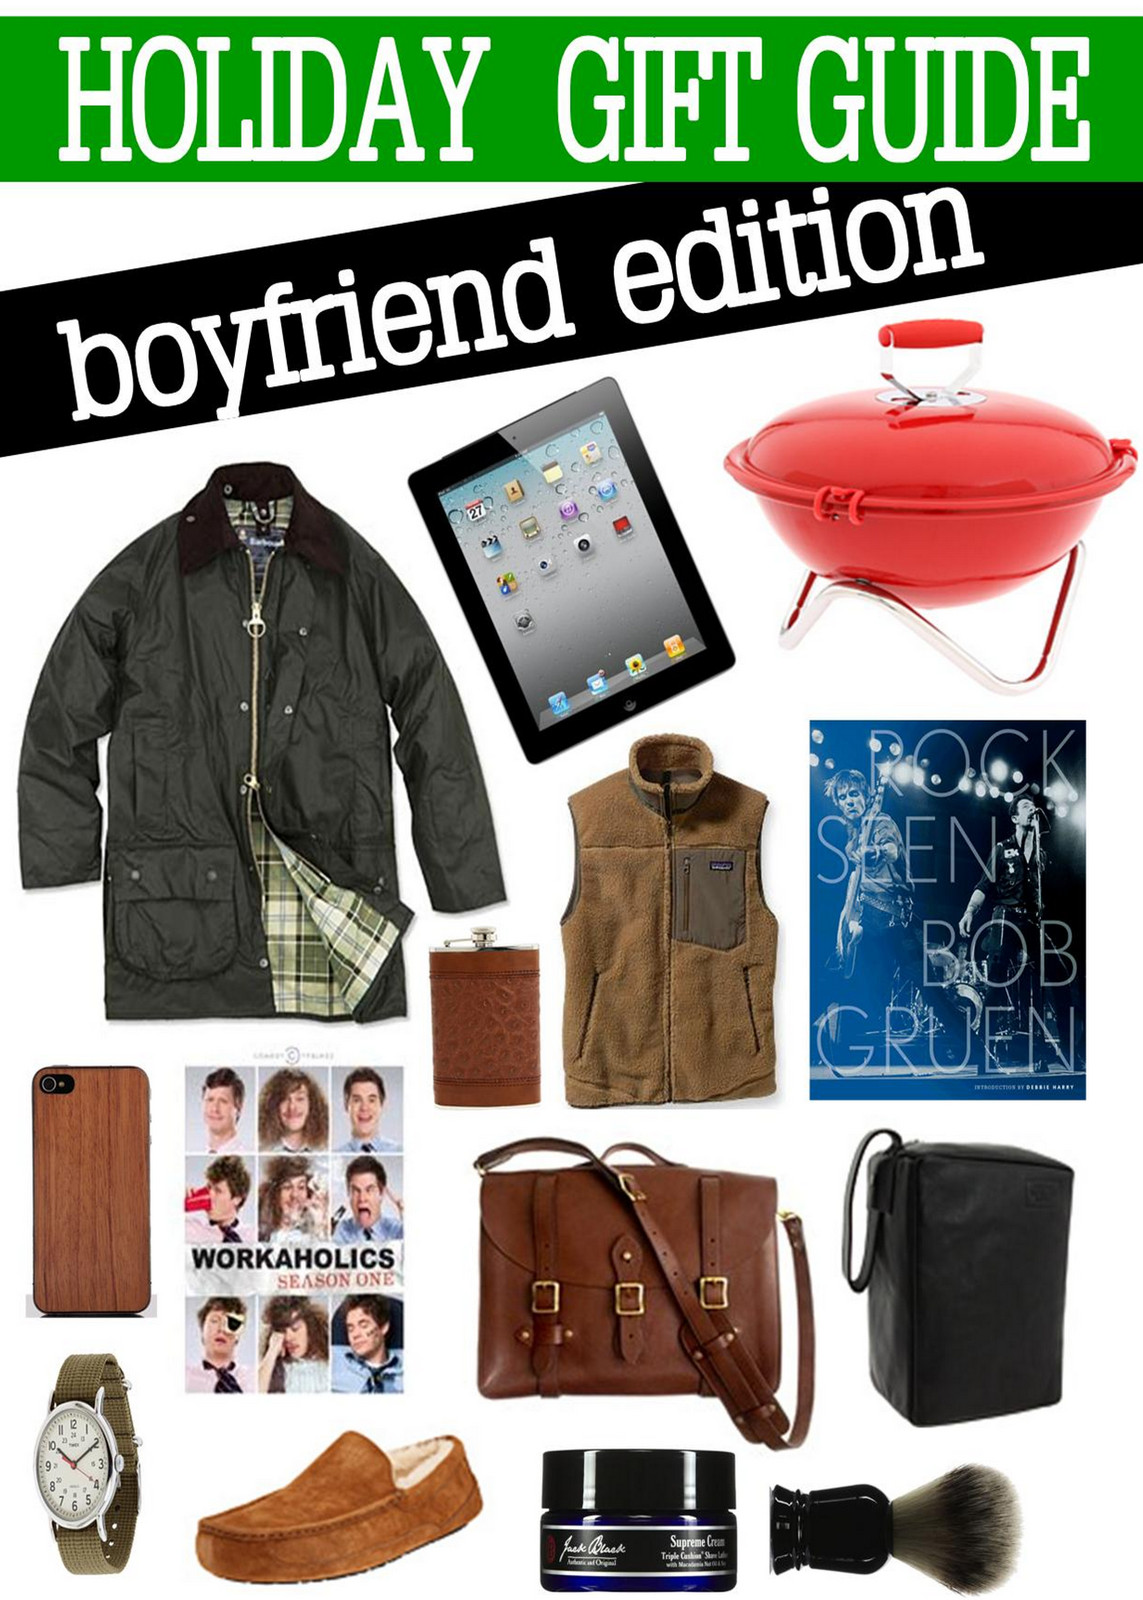 Good Gift Ideas For Boyfriend
 Good Gifts for Your Boyfriend